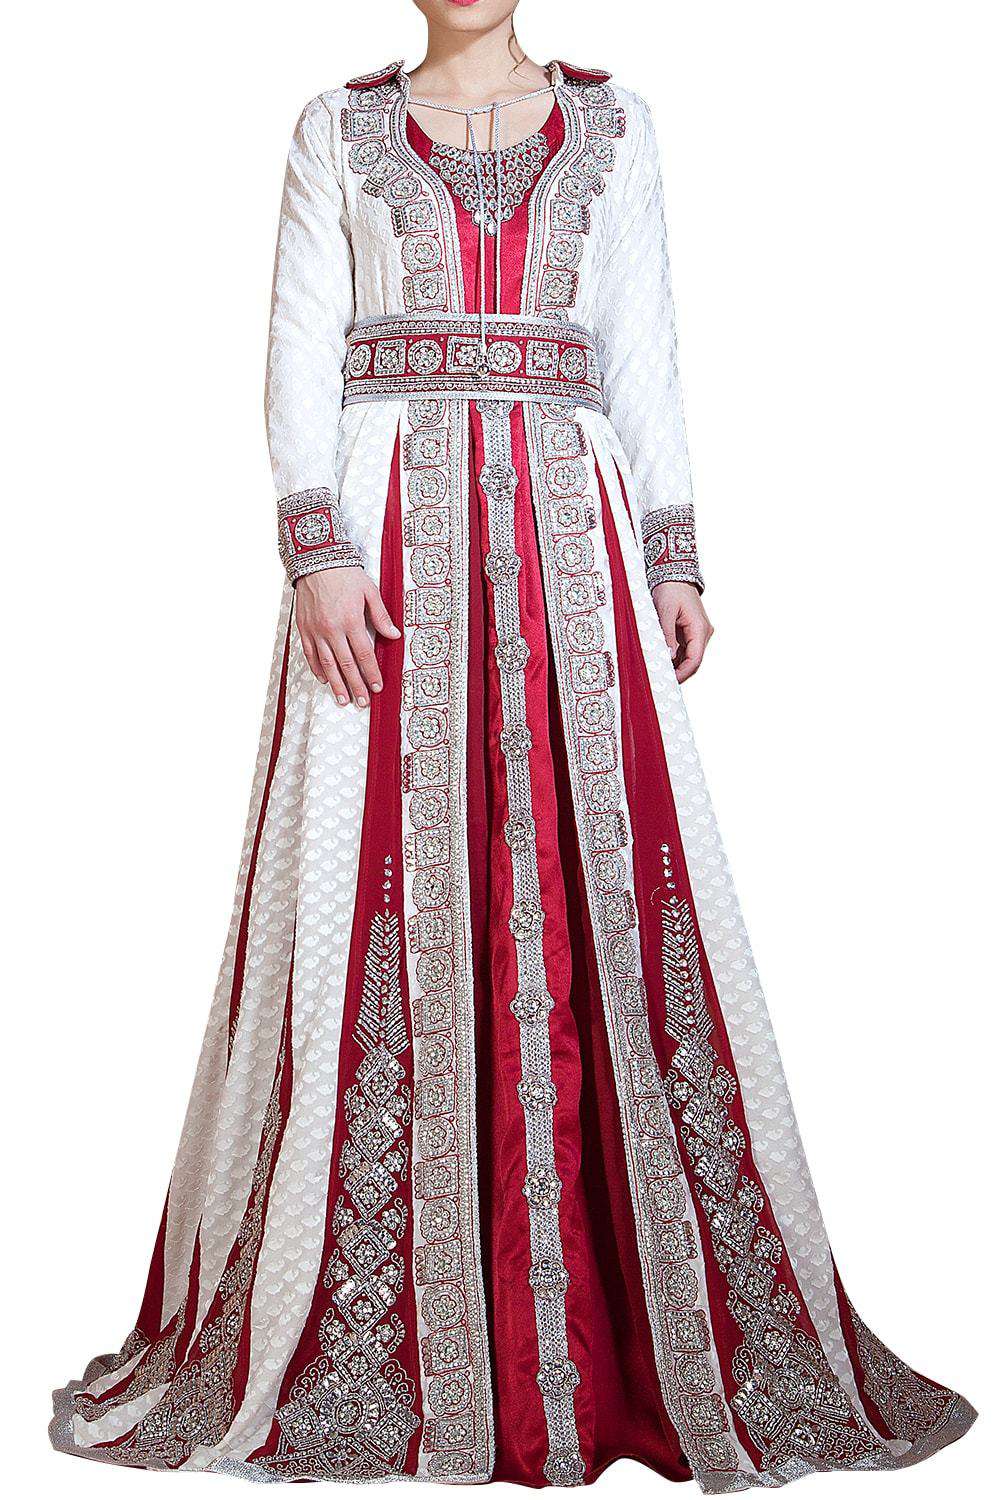 Indian Pakistani Bollywood Salwar Kameez Pakistani Fastival Suit Wedding  Dress | eBay